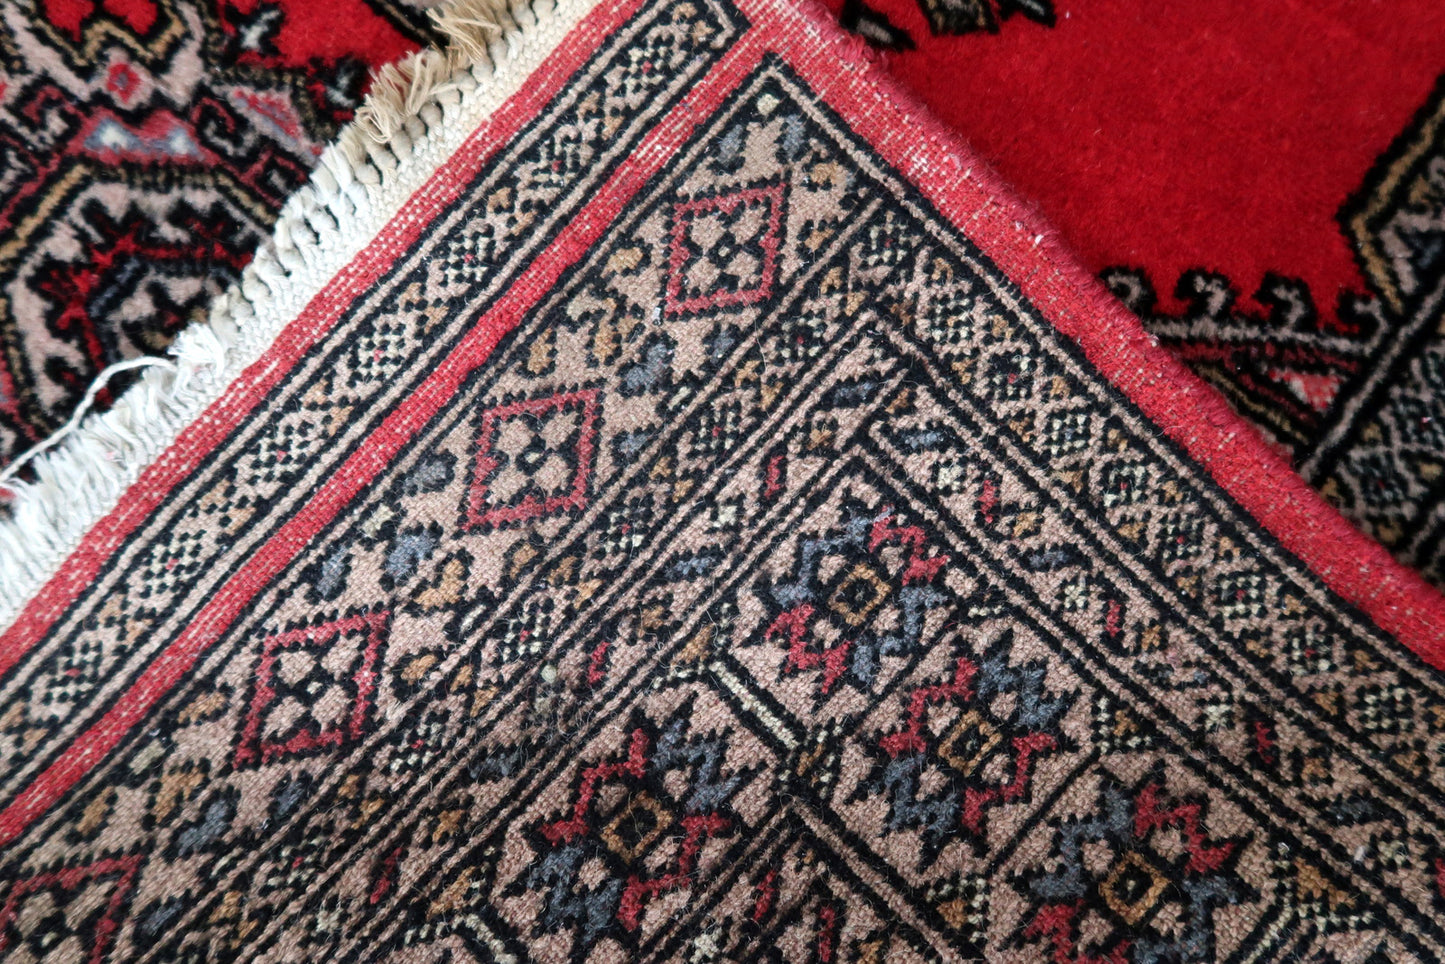 Back side of the Handmade Vintage Uzbek Bukhara Rug, showcasing craftsmanship.